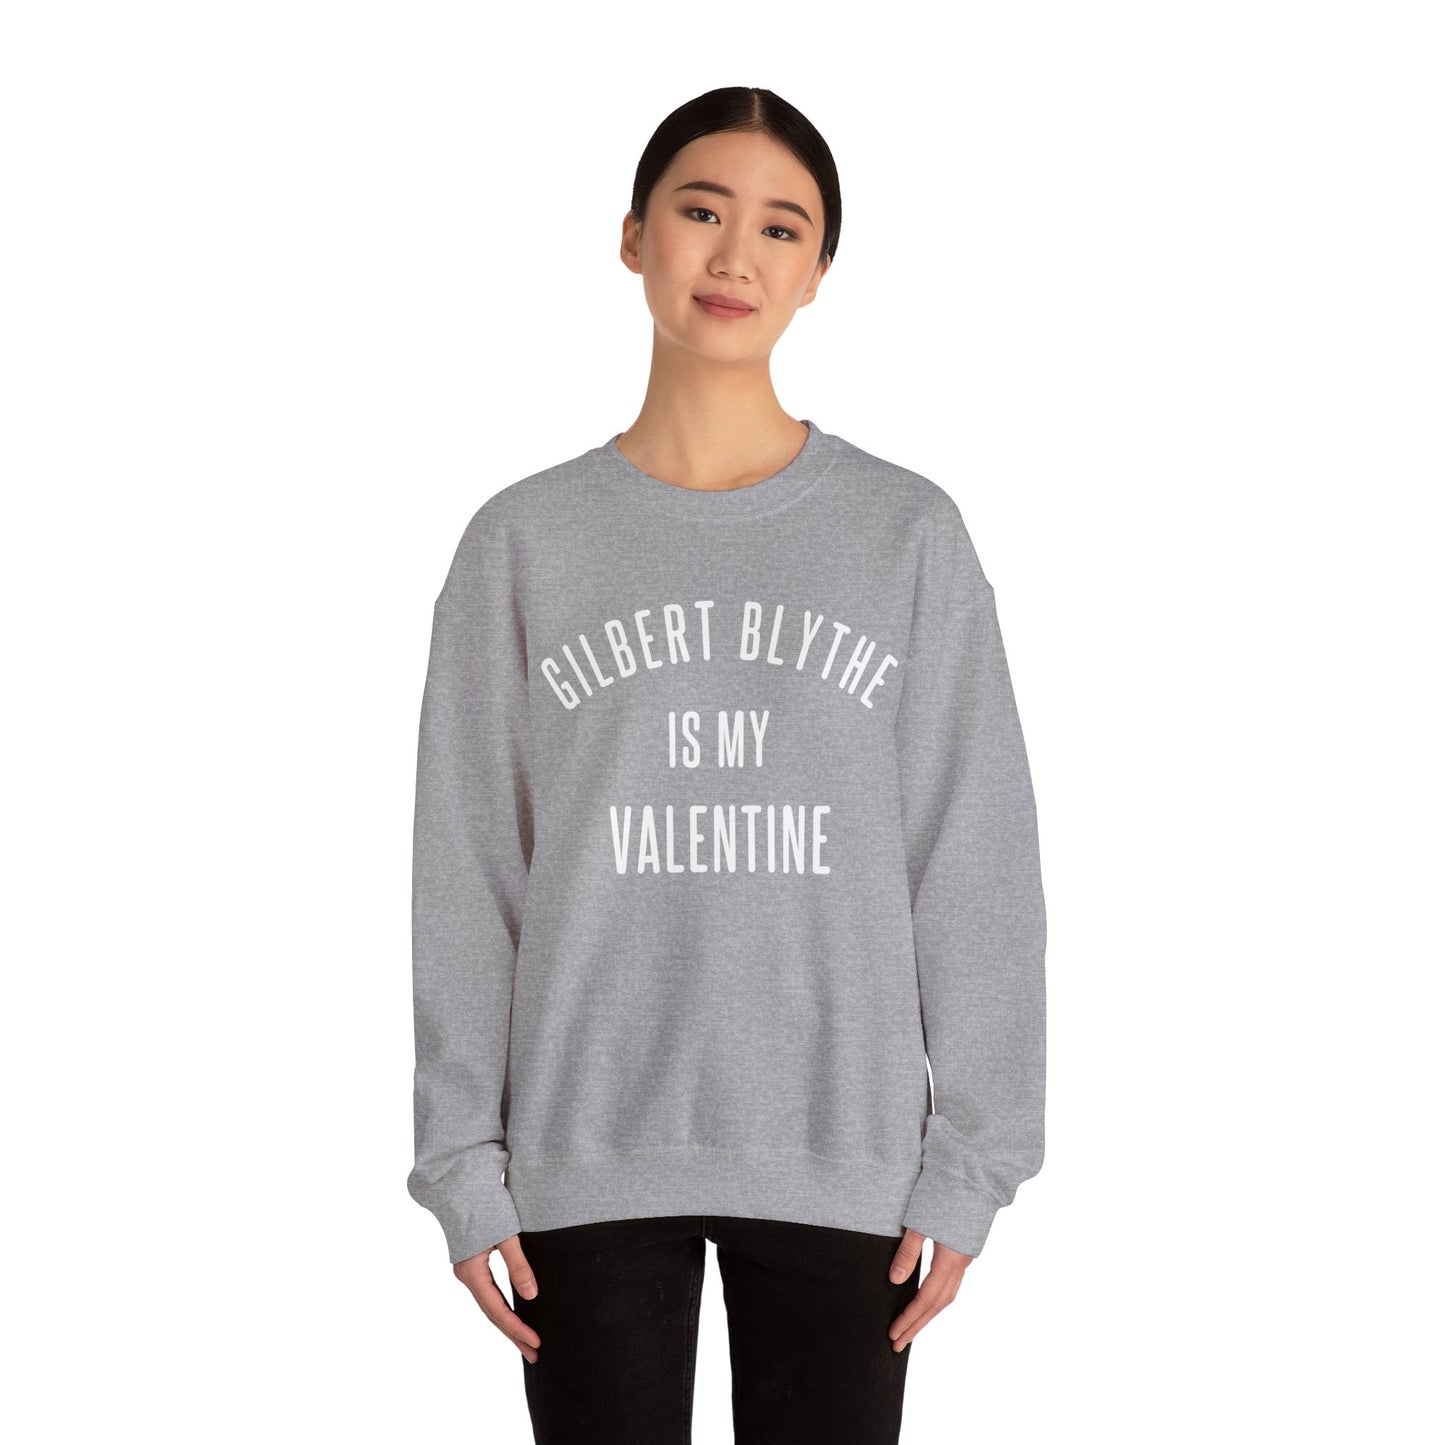 Gilbert Blythe is my Valentine Crewneck Sweatshirt